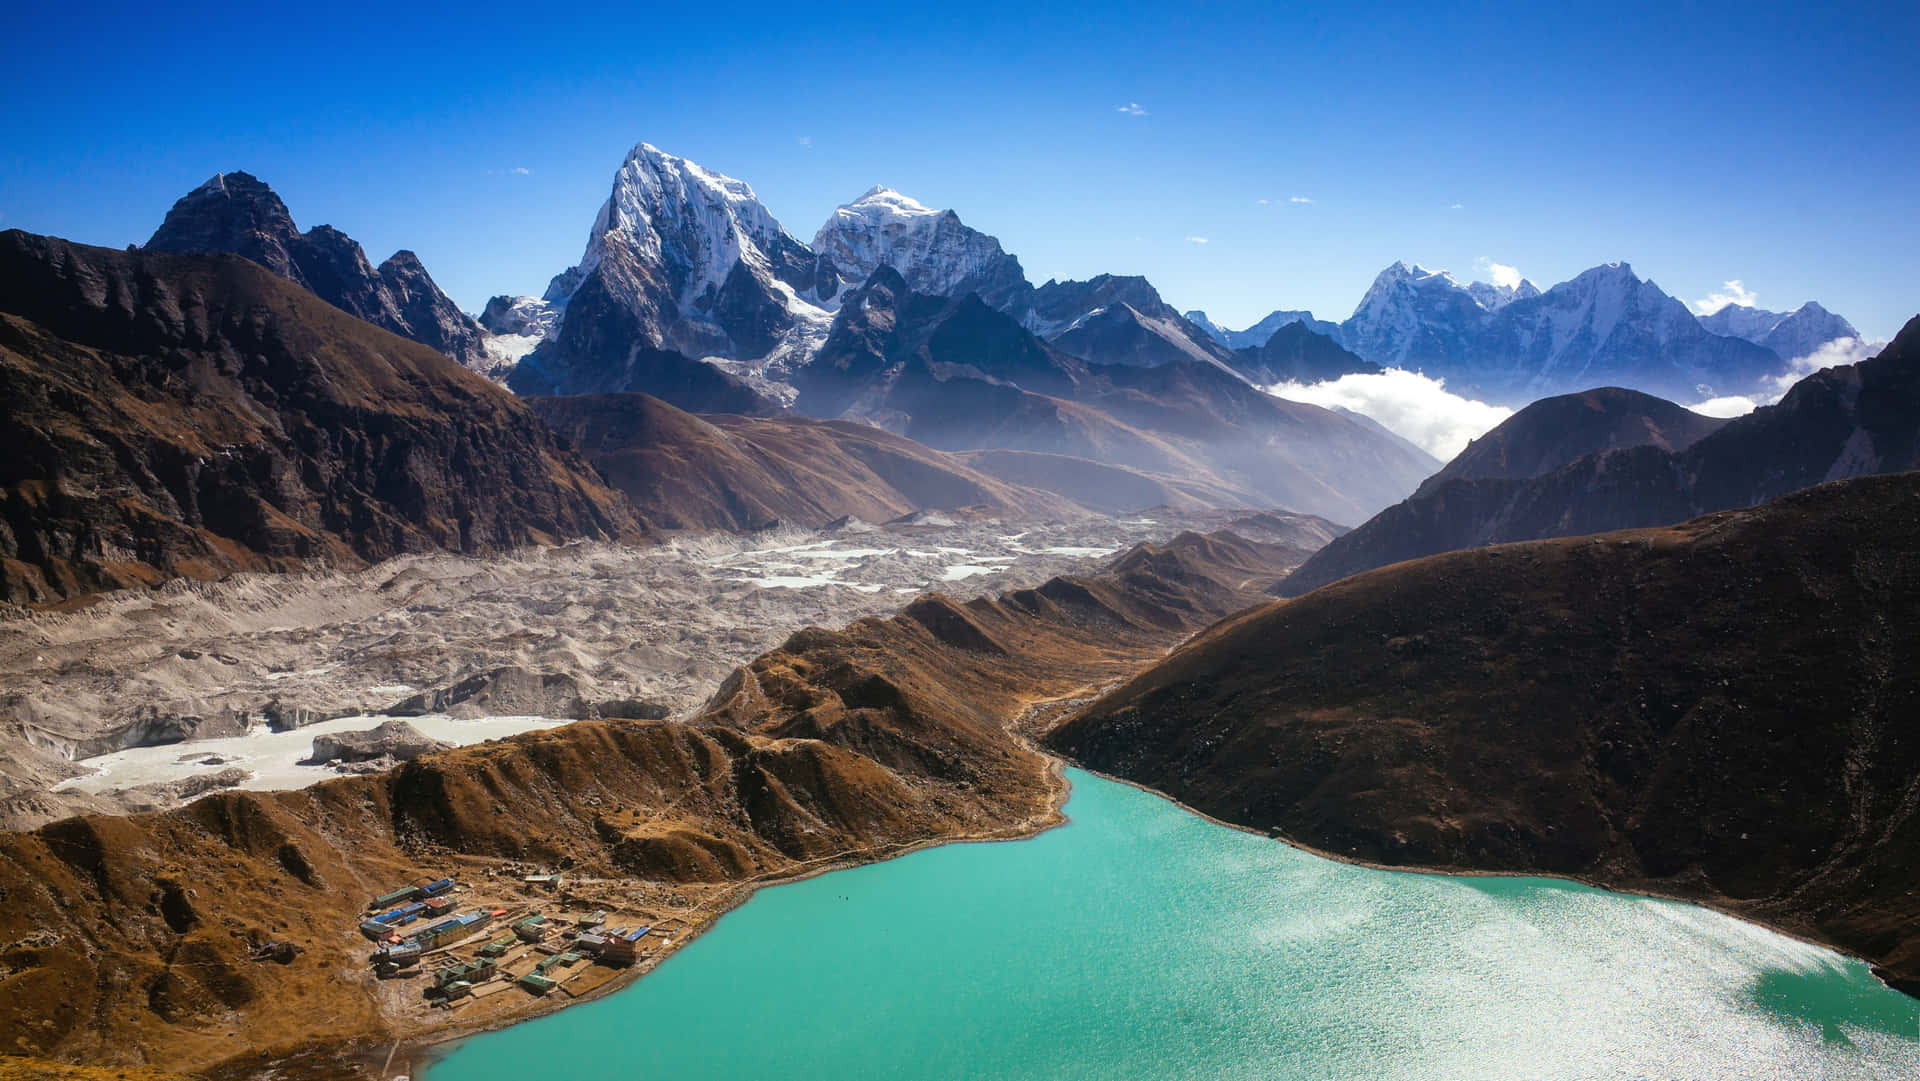 "The Majestic Himalayas"